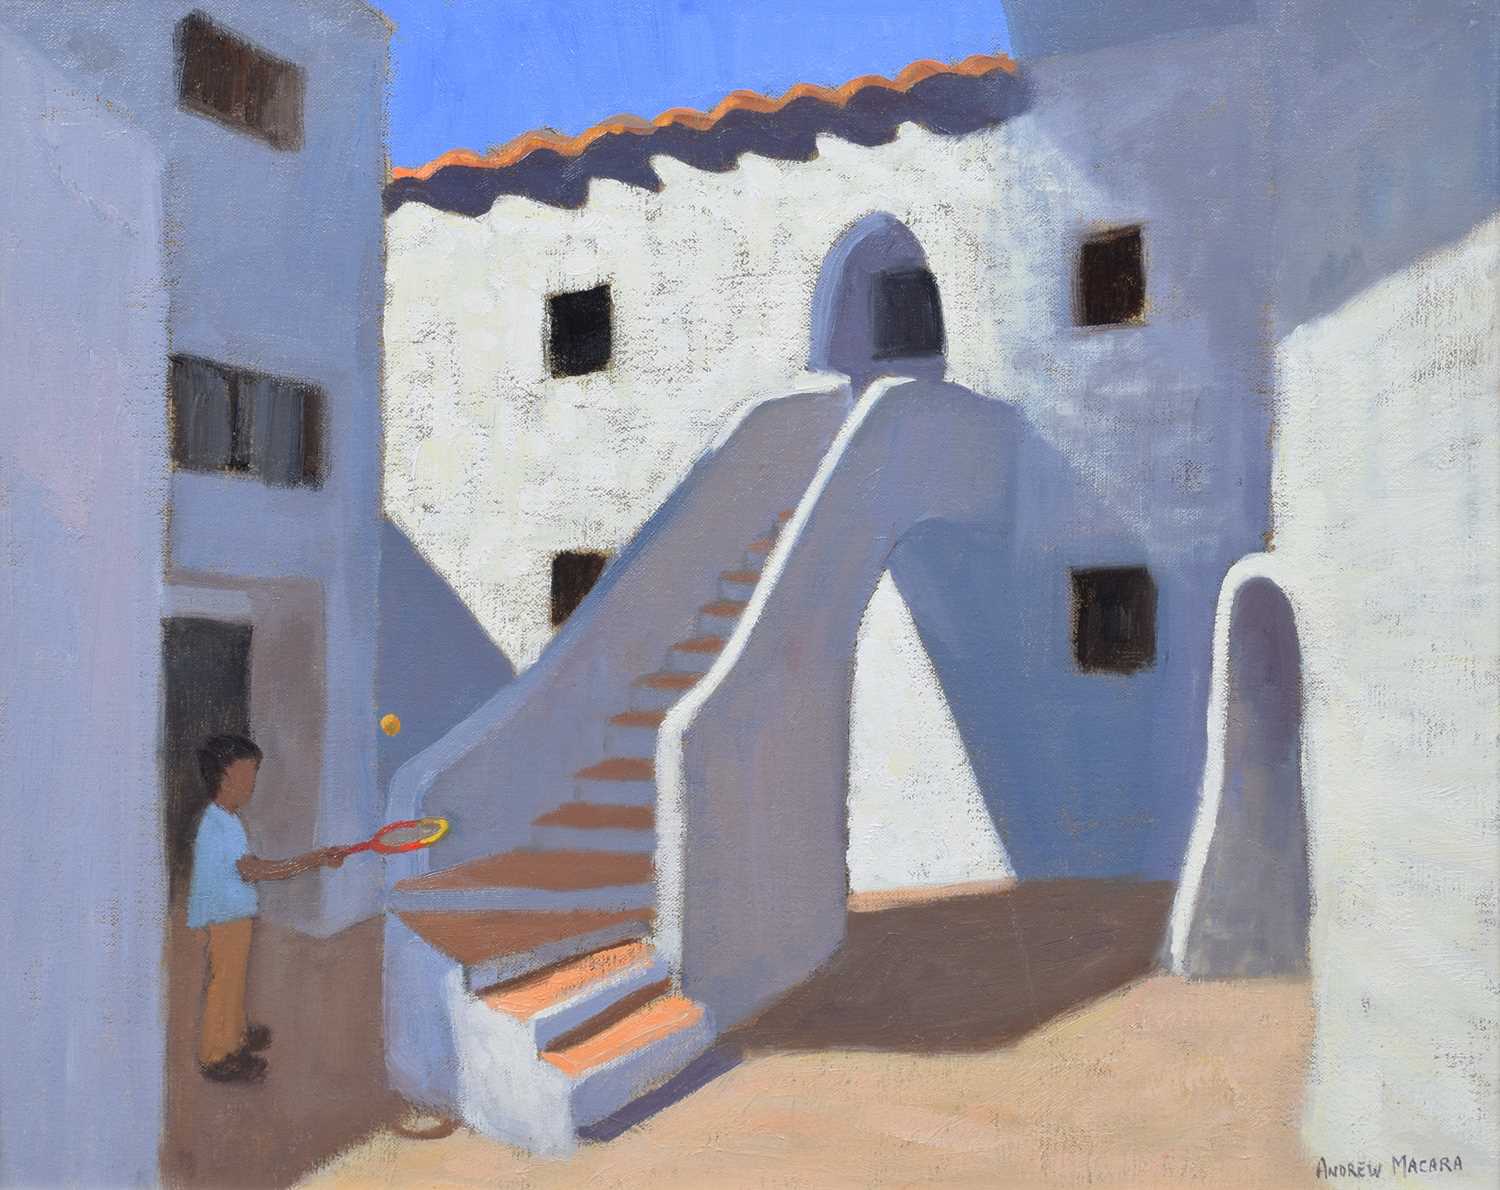 Andrew Macara, "Spanish Steps", oil.